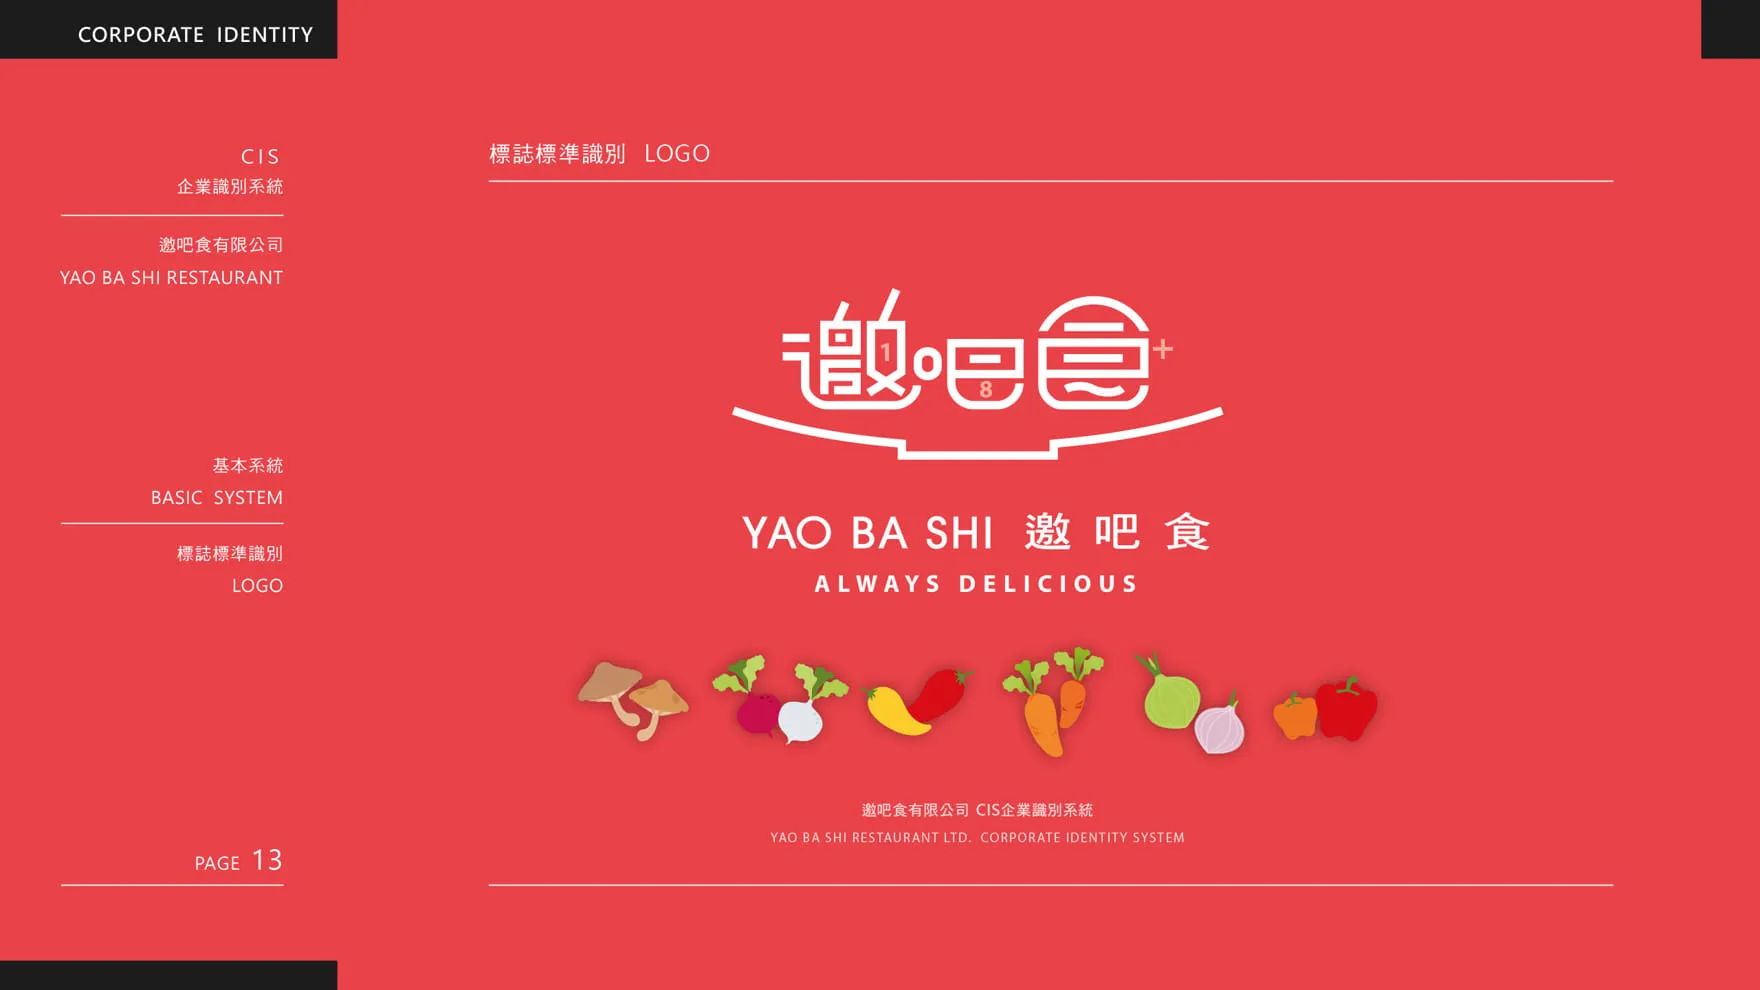 邀吧食 YAO BA SHI 品牌LOGO規範手冊 CIS GUIDELINES